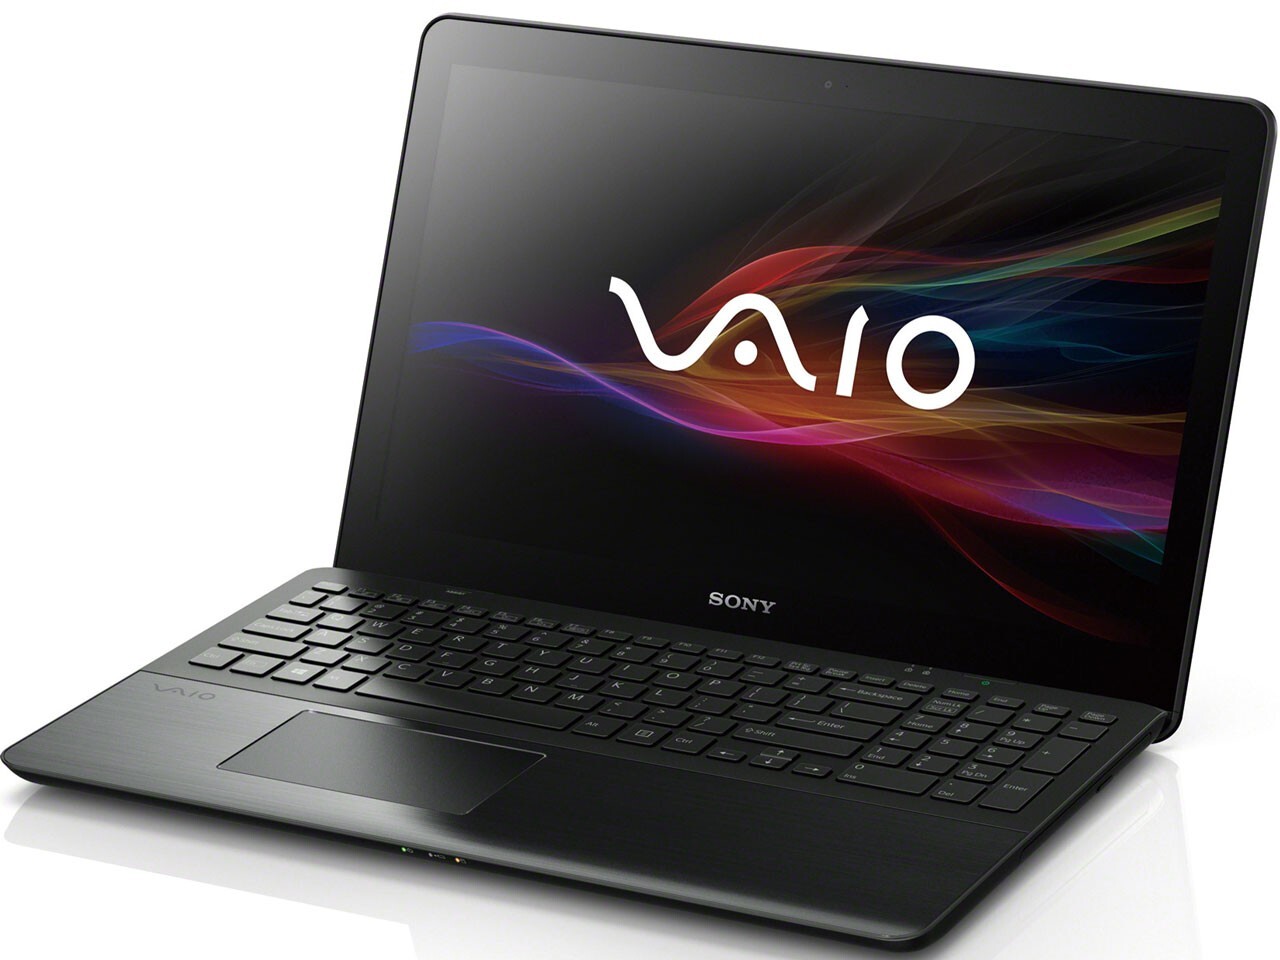 Laptop Sony Vaio Fit 15E SVF1532CSGB - Intel Core i7-4500U 1.8GHz, 4GB RAM, 500GB HDD, Nvidia GT740M, 15.5 inch